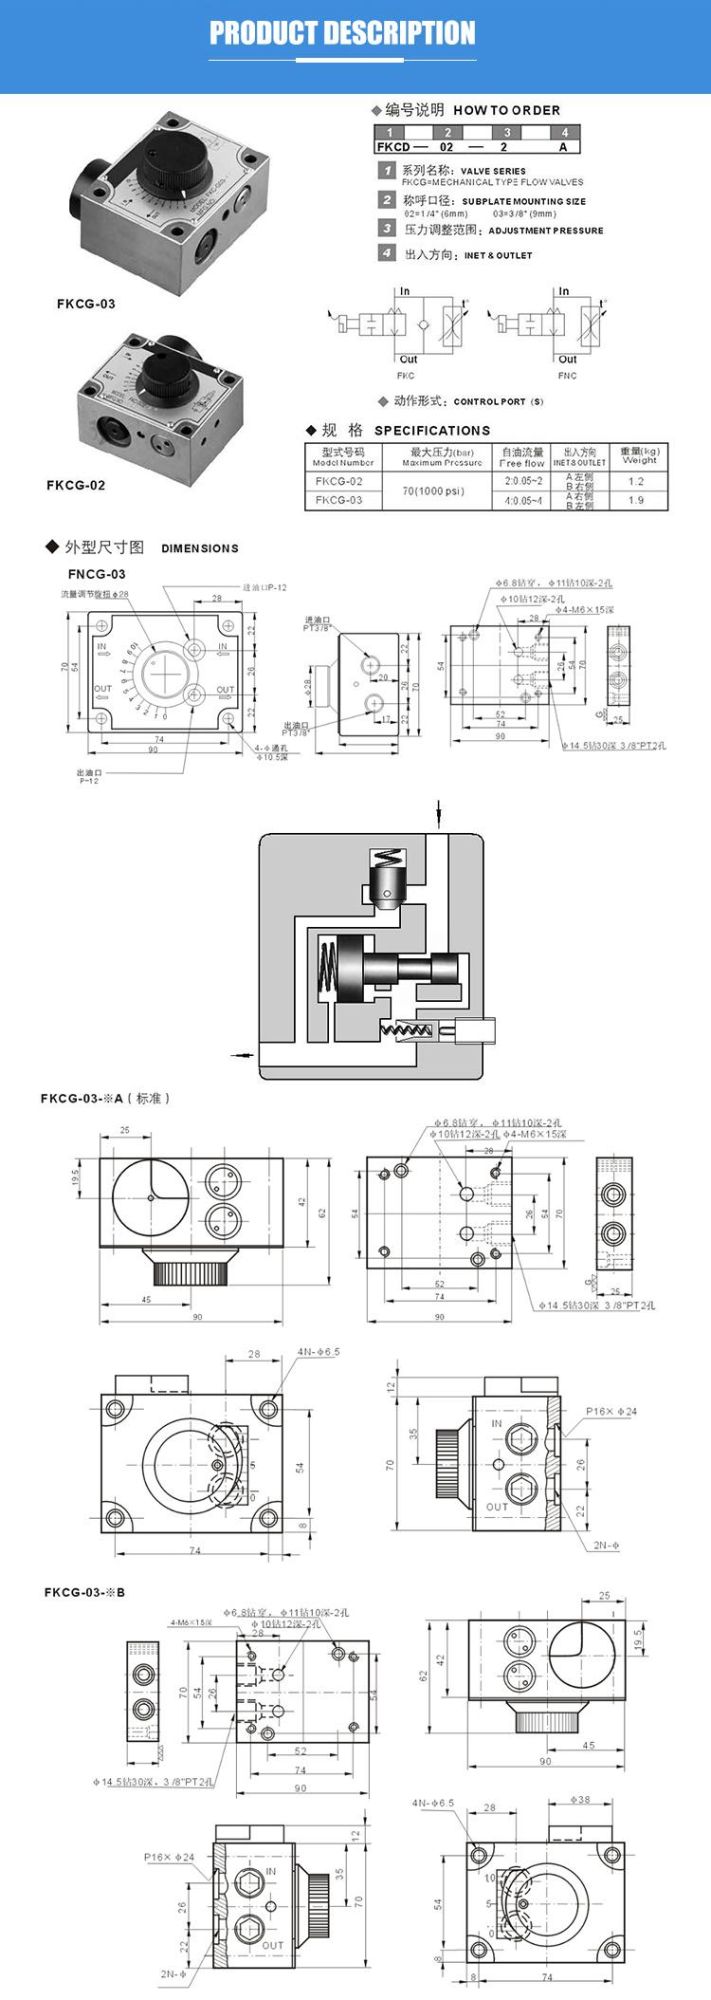 FKCG-03 mechanical type hydraulic flow control valve